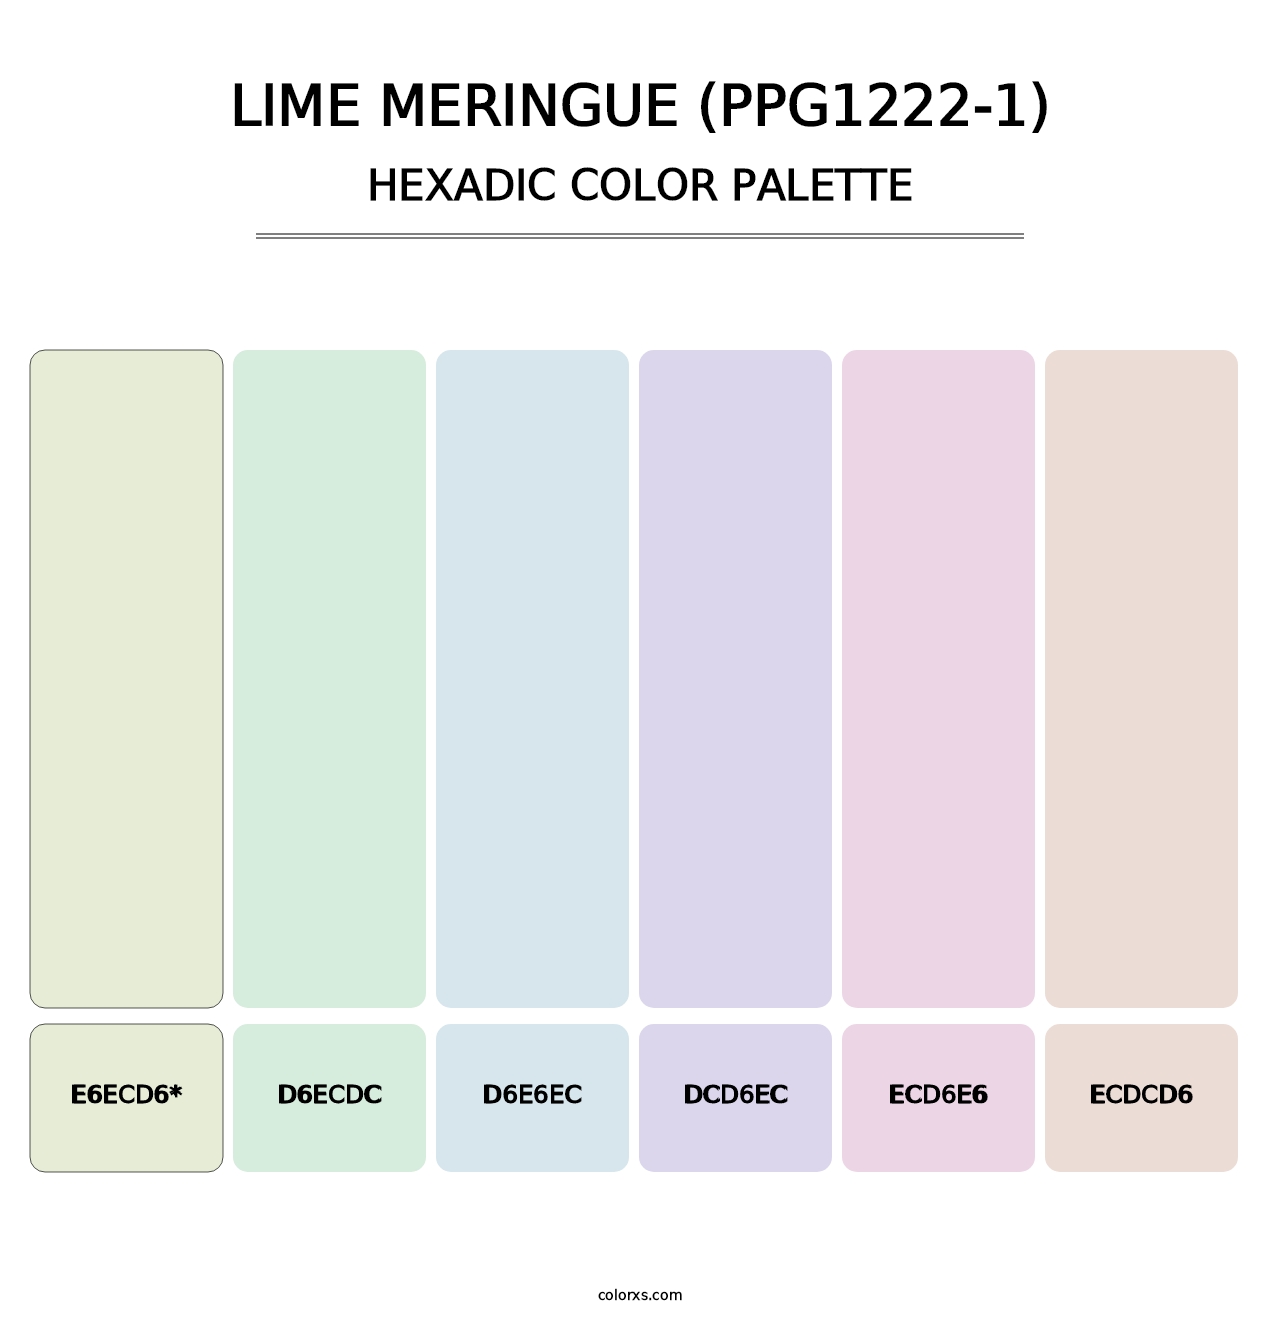 Lime Meringue (PPG1222-1) - Hexadic Color Palette